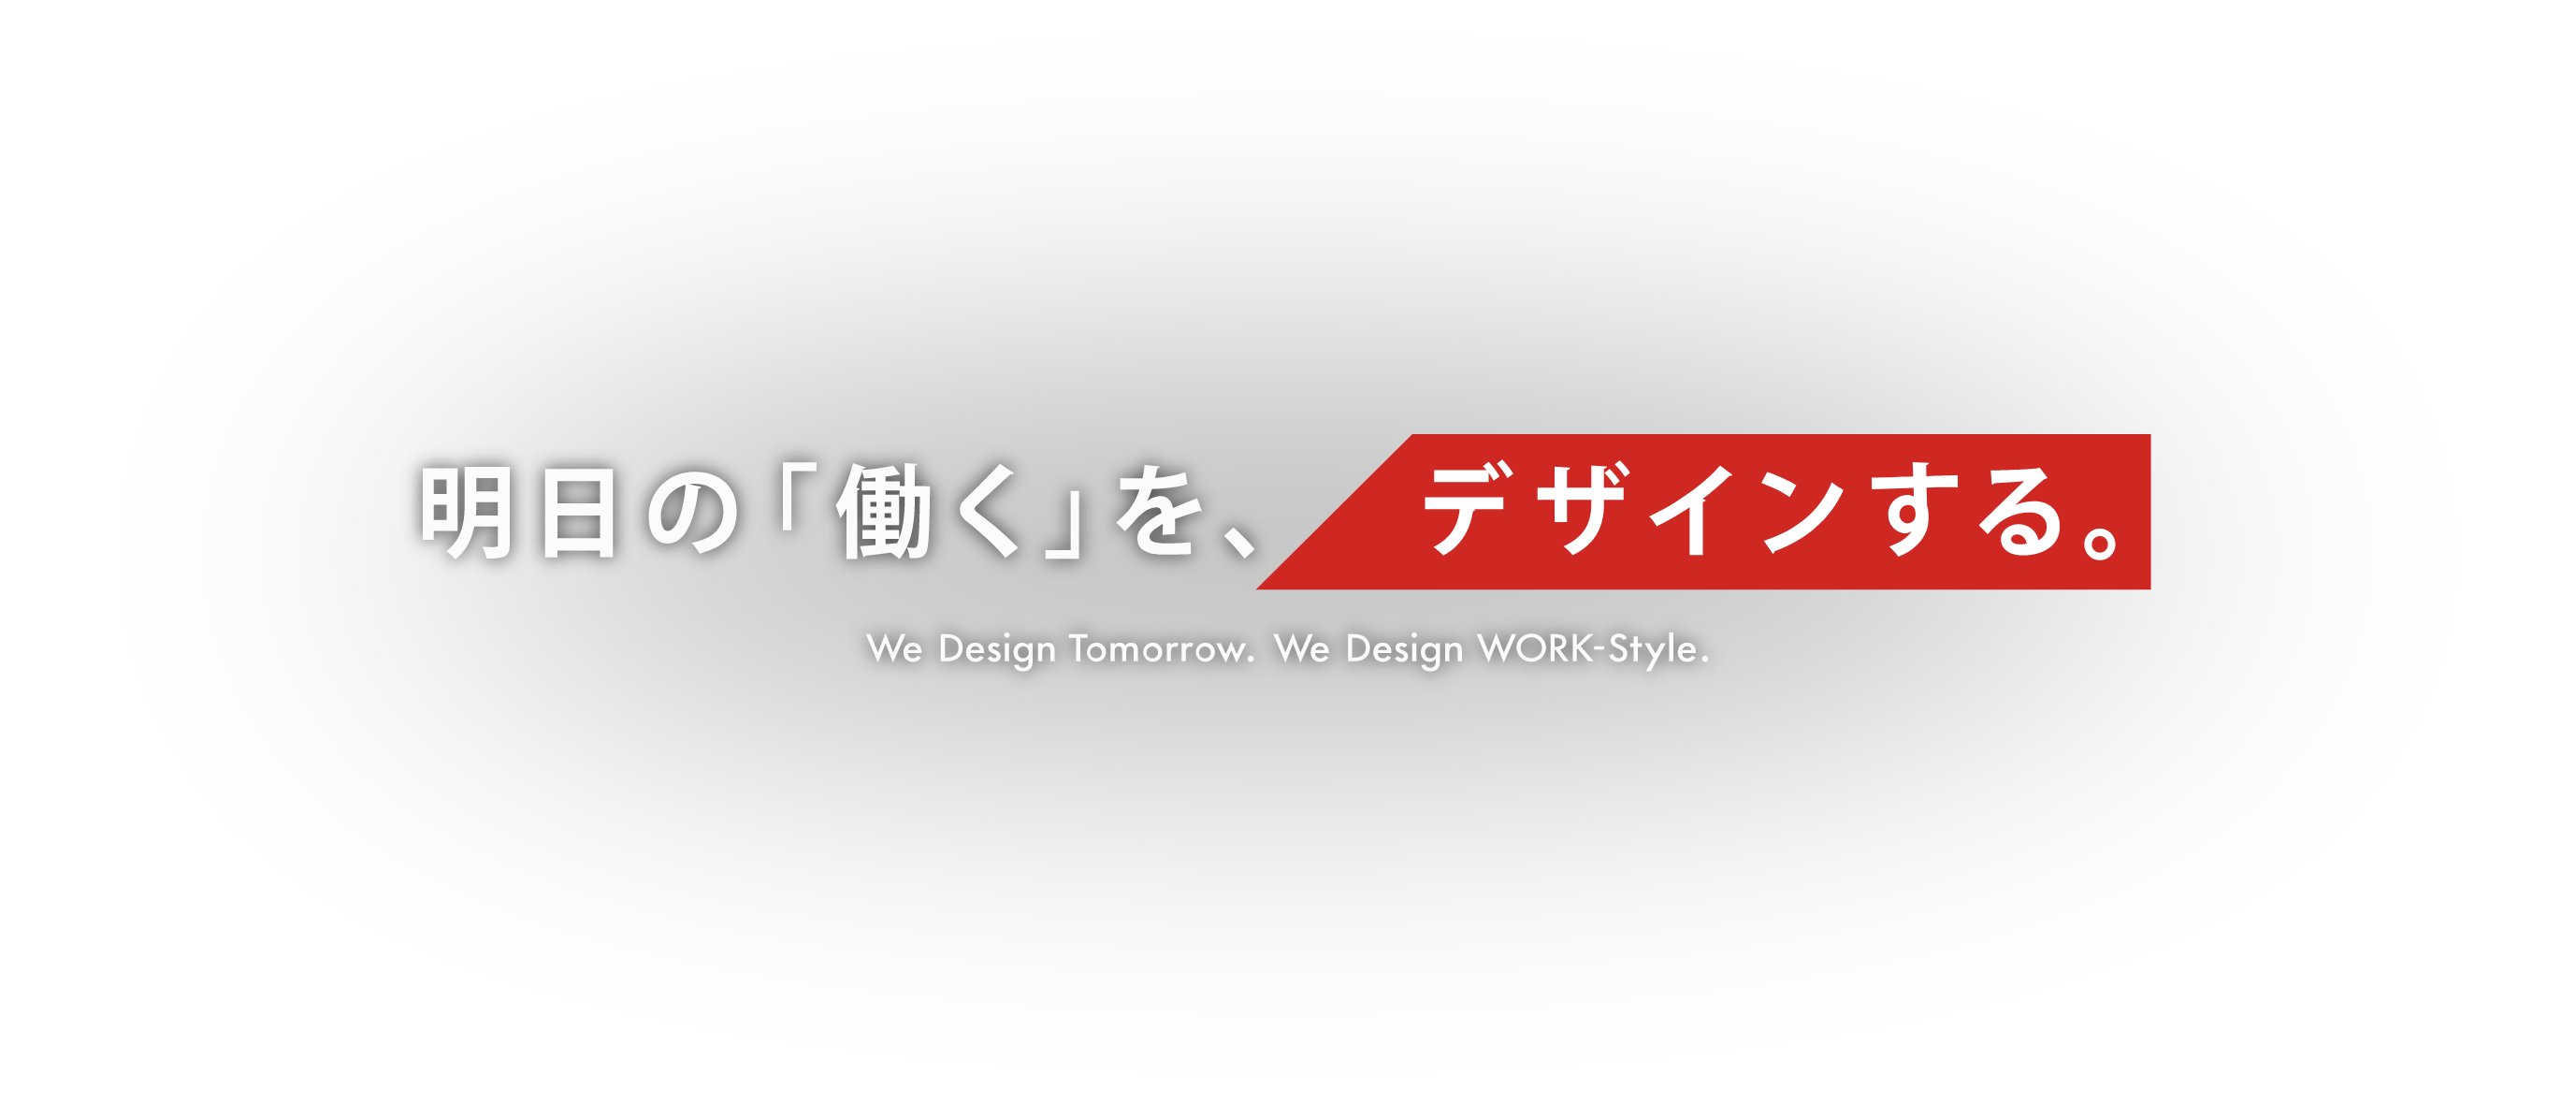 We Design Tomorrow. We Design WORK-Style.